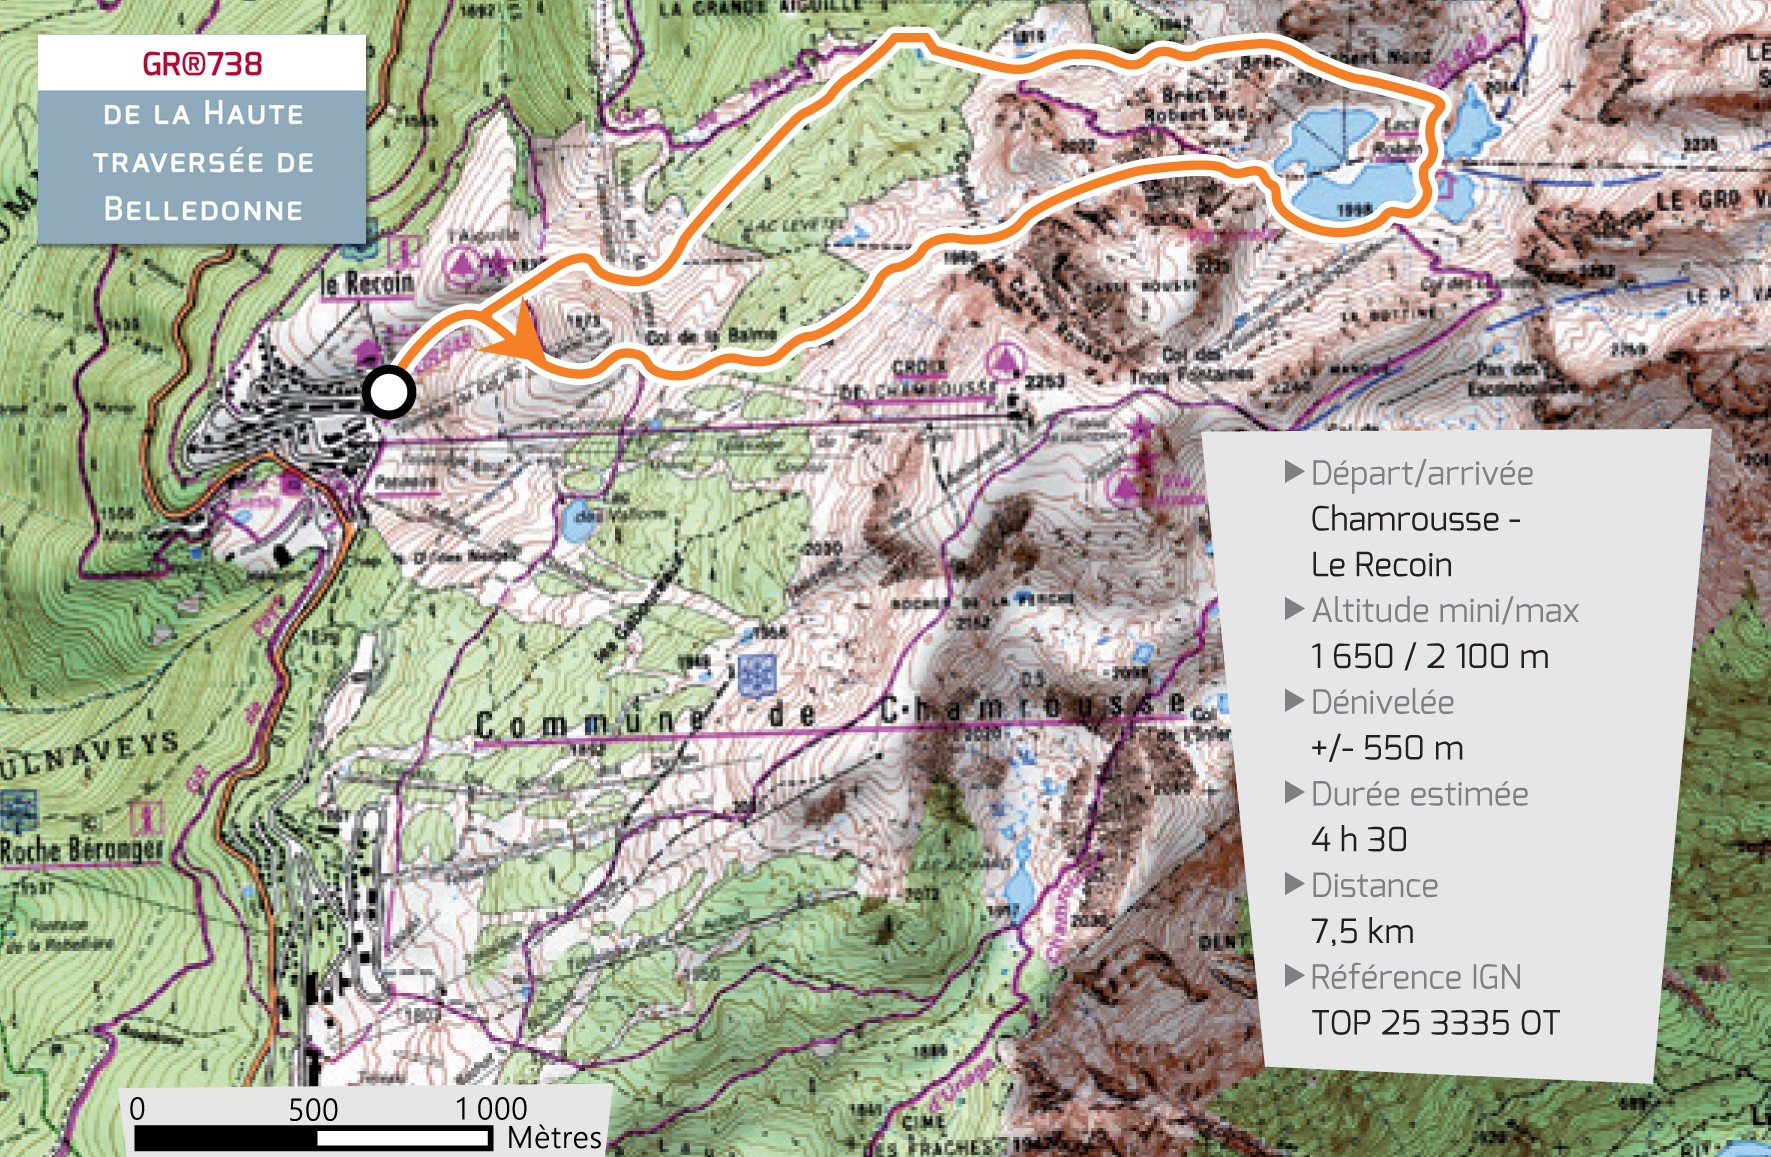 Chamrousse GR738 haute traversee belledonne station ete randonnee balade isere alpes france boucle alpage